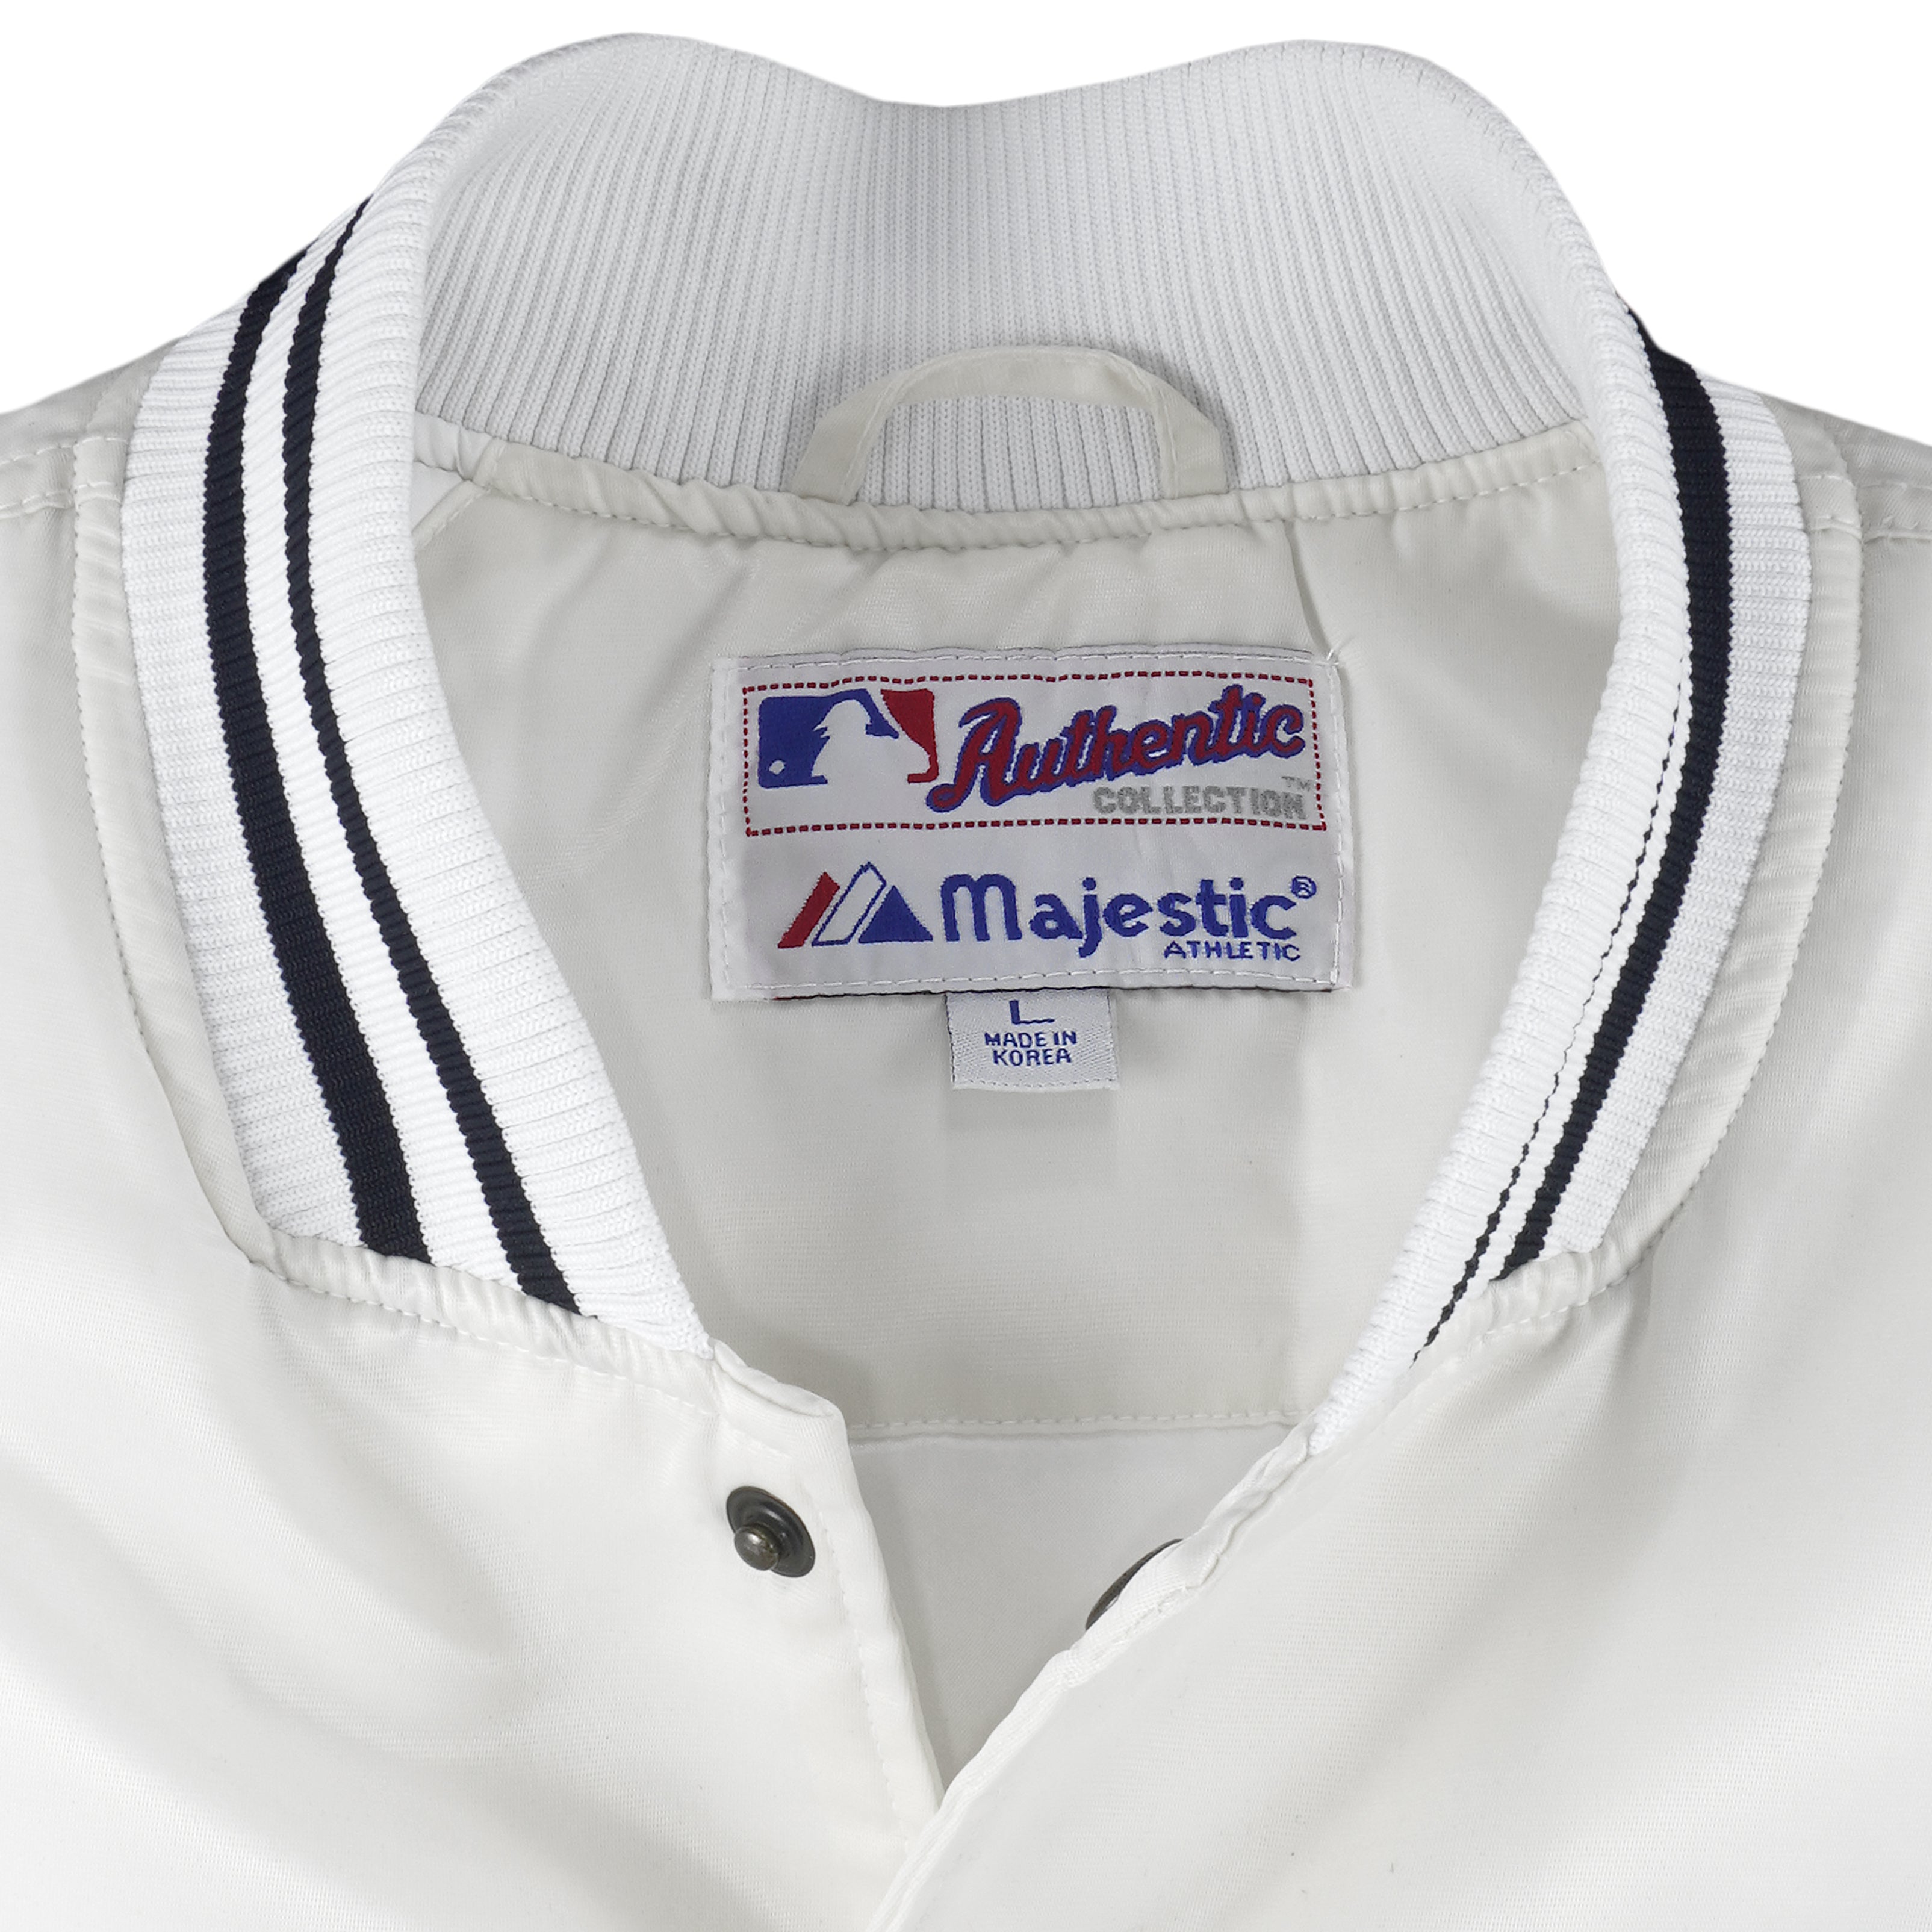 La Dodgers All Star Game 2022 Varsity Jacket